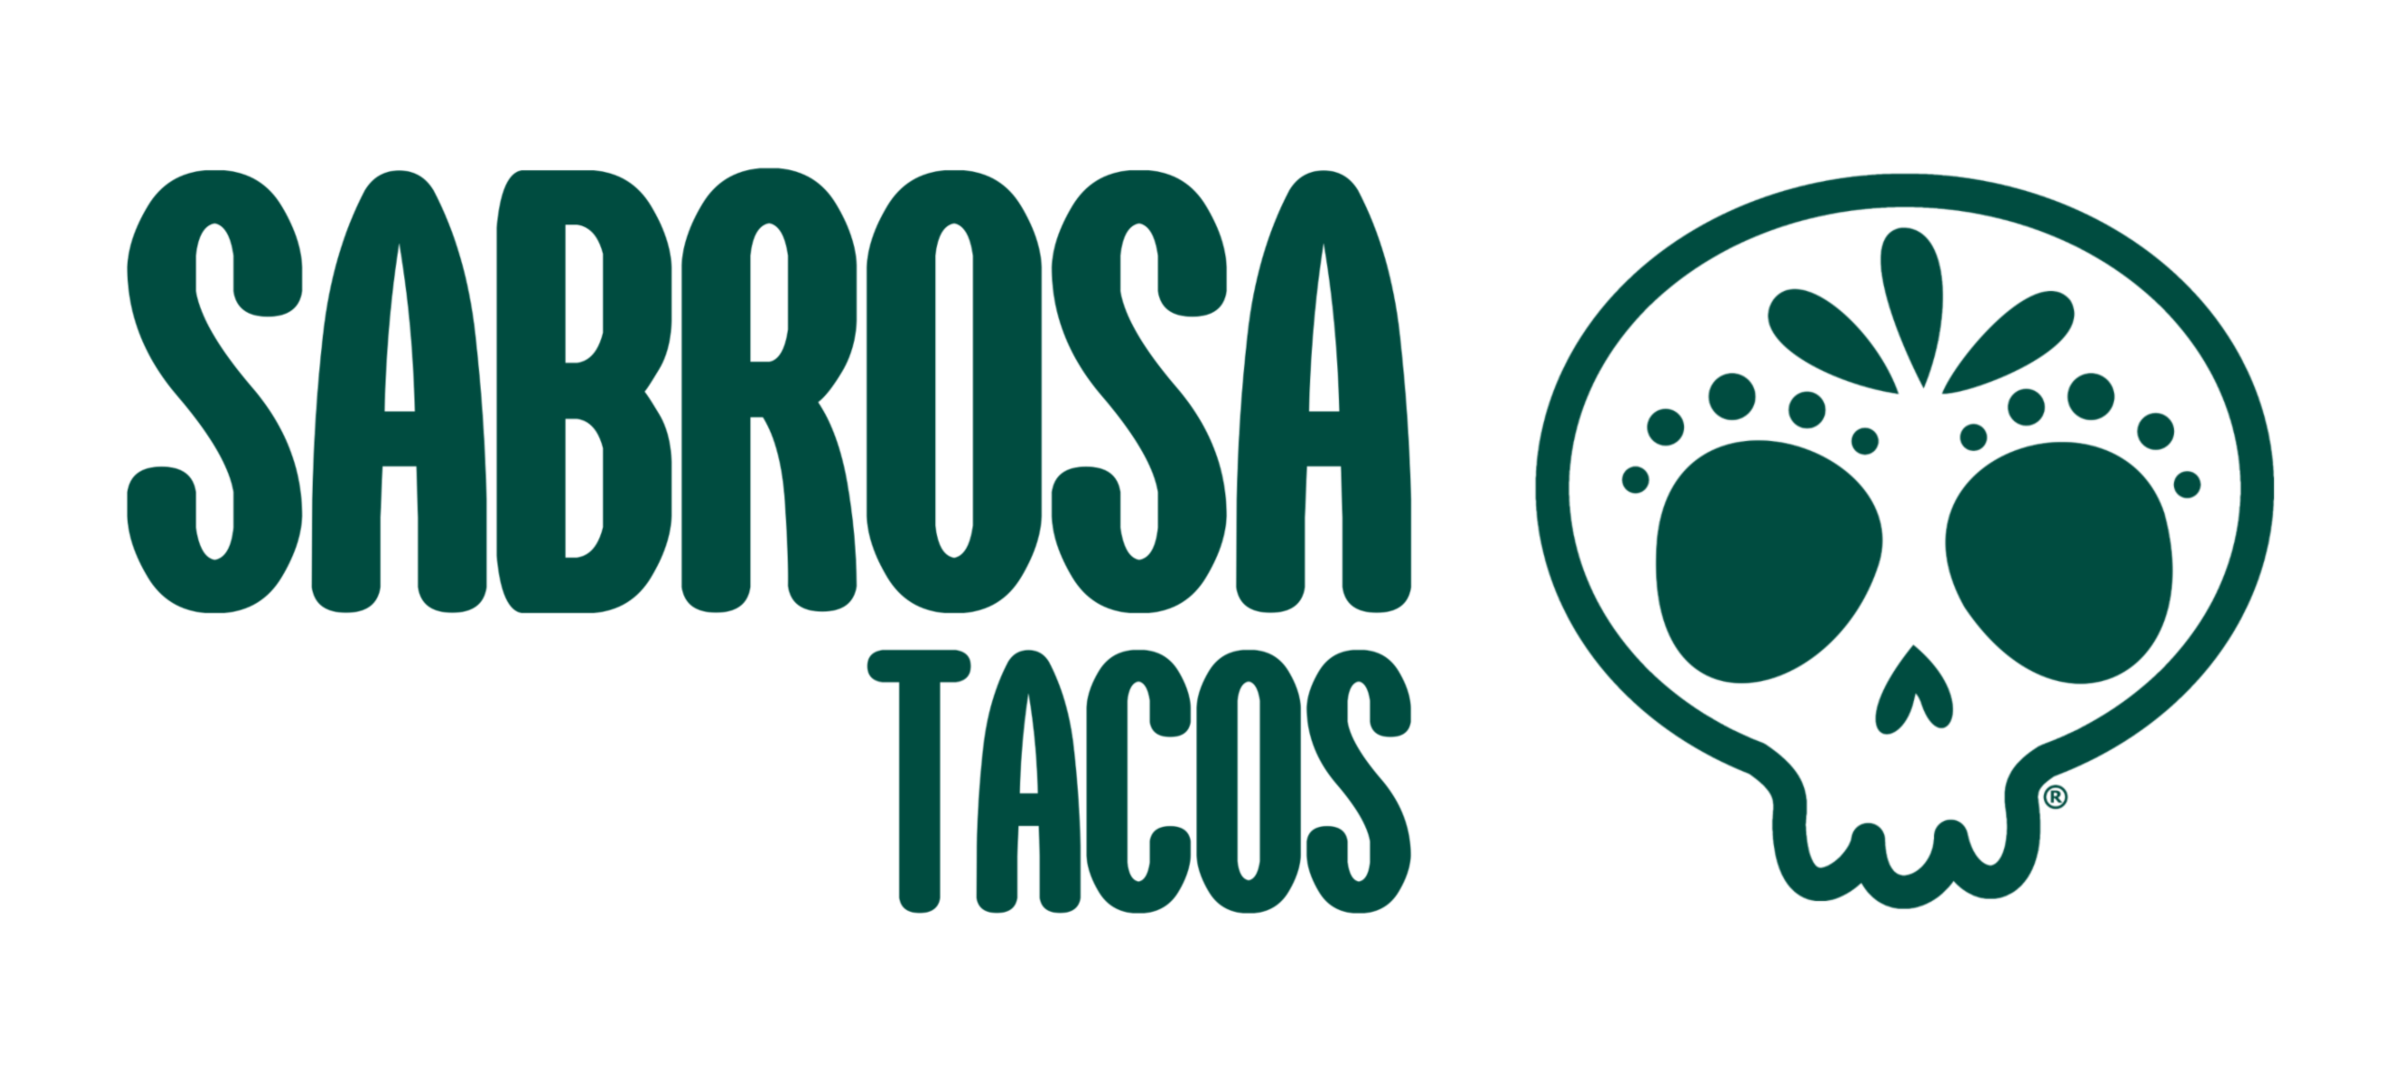 SABROSA TACOS | Tasty Mexican Street Food